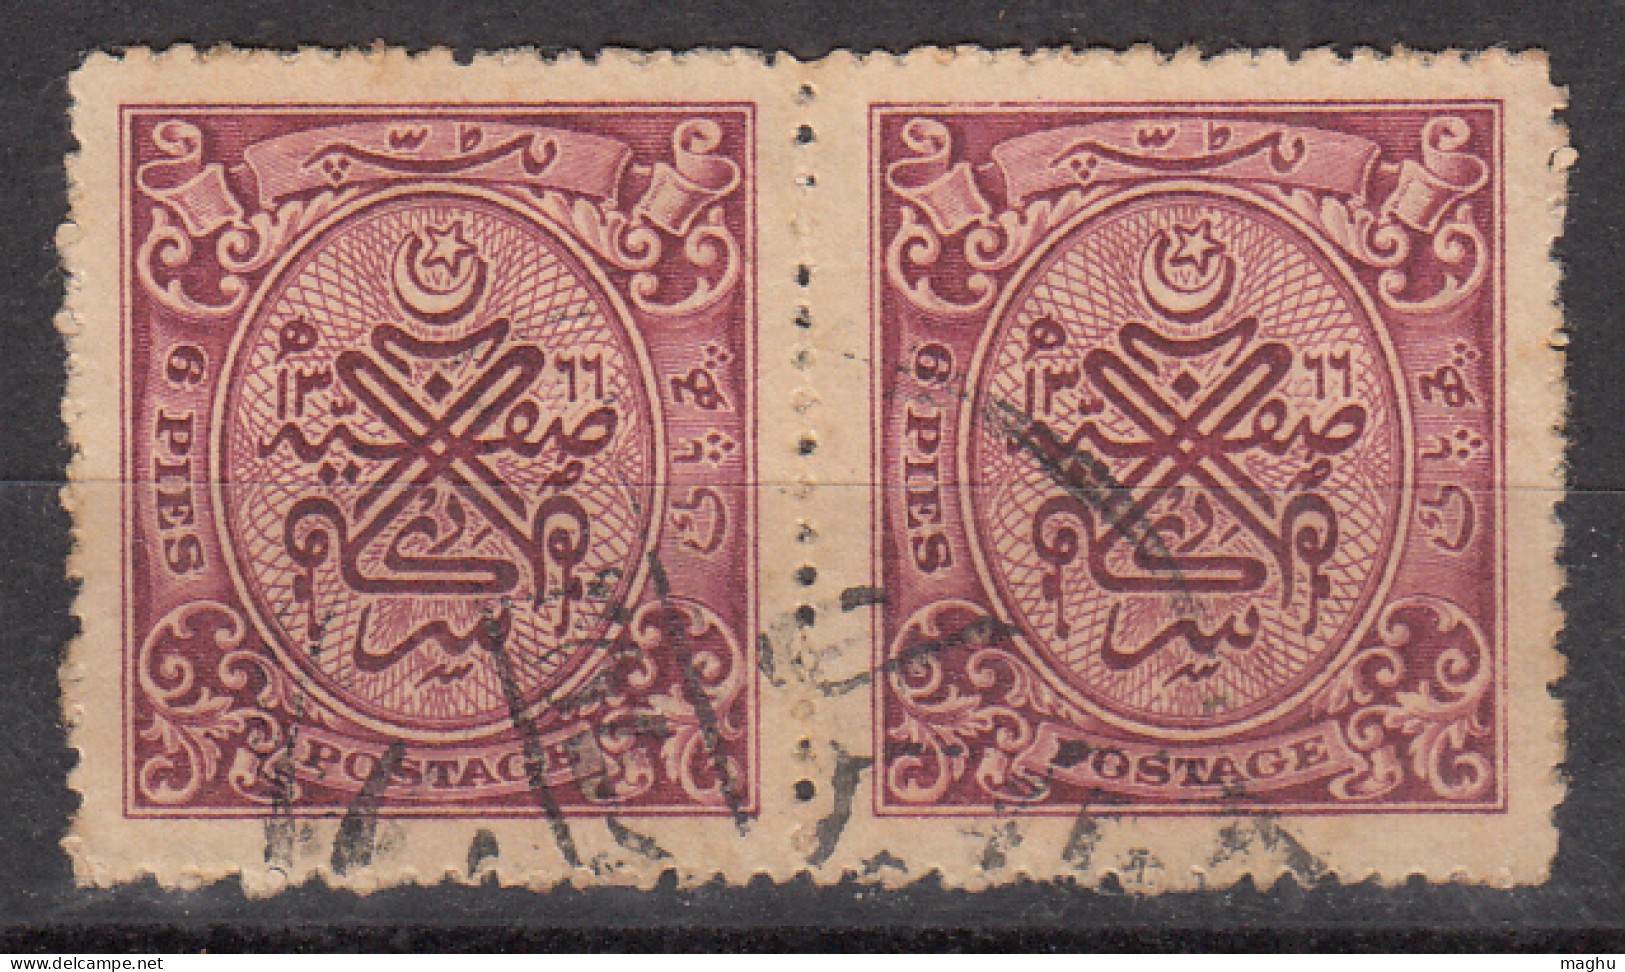 6p Paid Used 1948 Hyderabad, British India State - Hyderabad